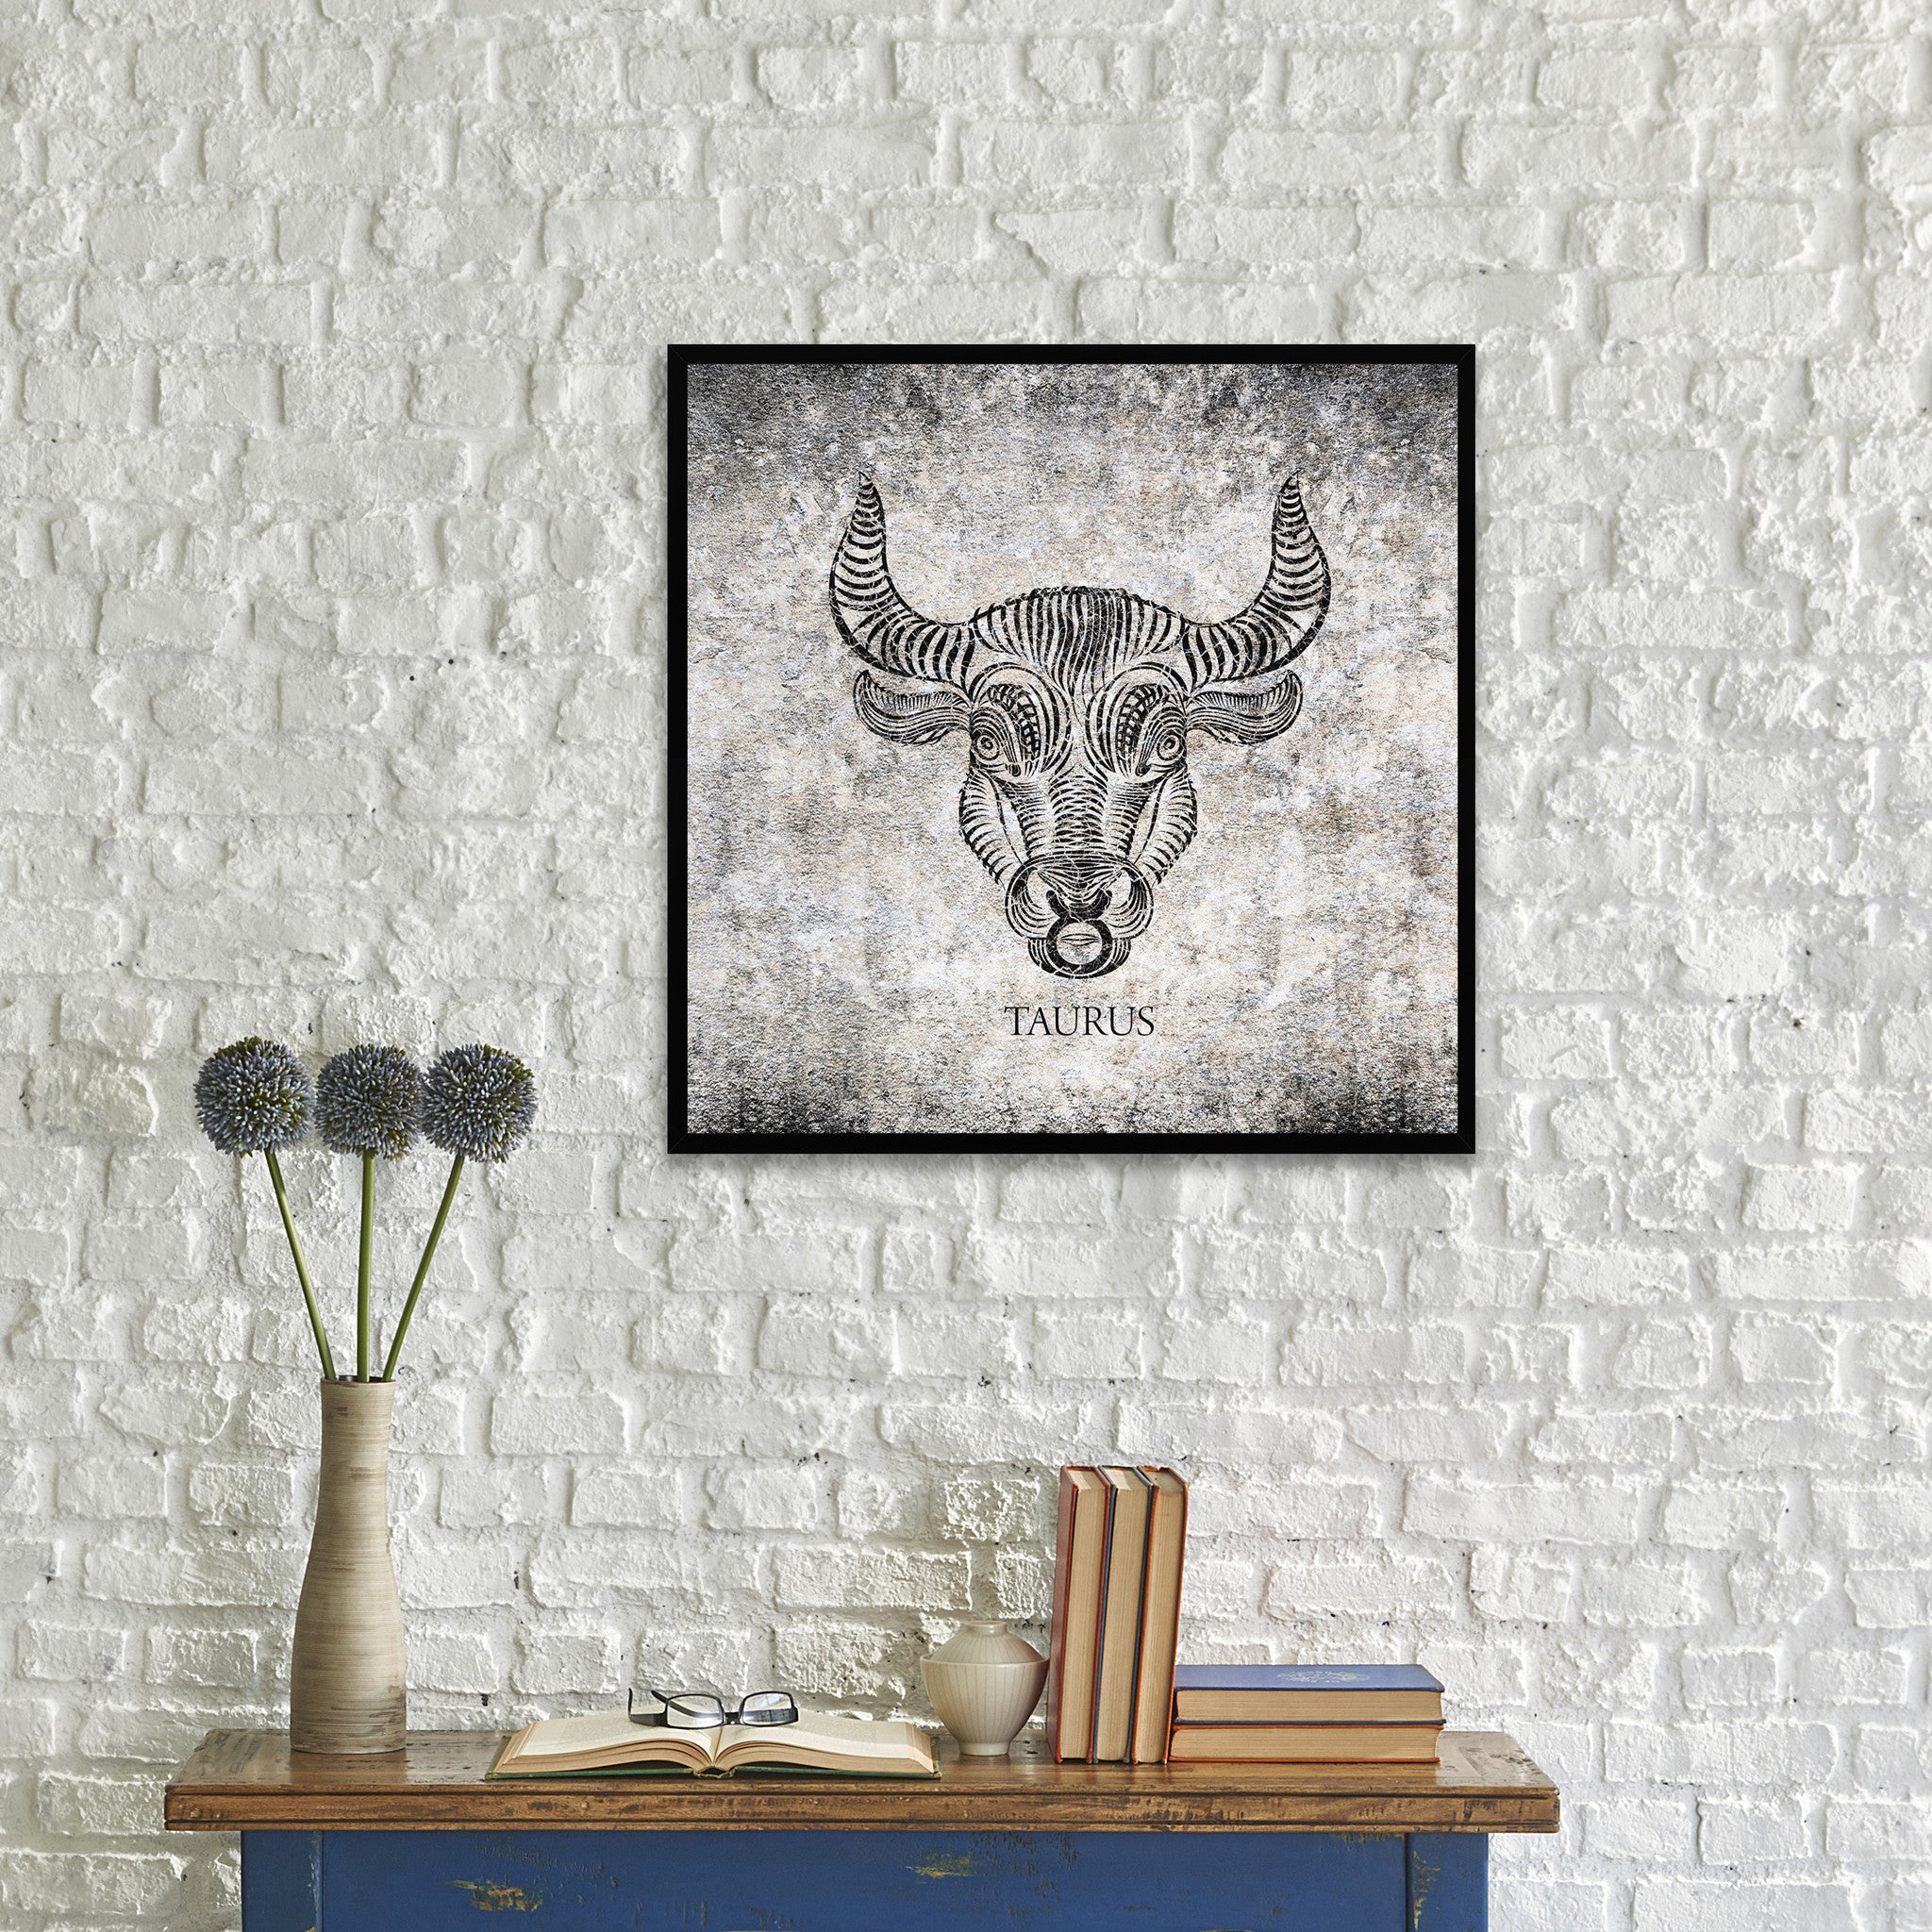 Zodiac Taurus Horoscope Black Canvas Print, Black Picture Frame Home Decor Wall Art Gift Ideas